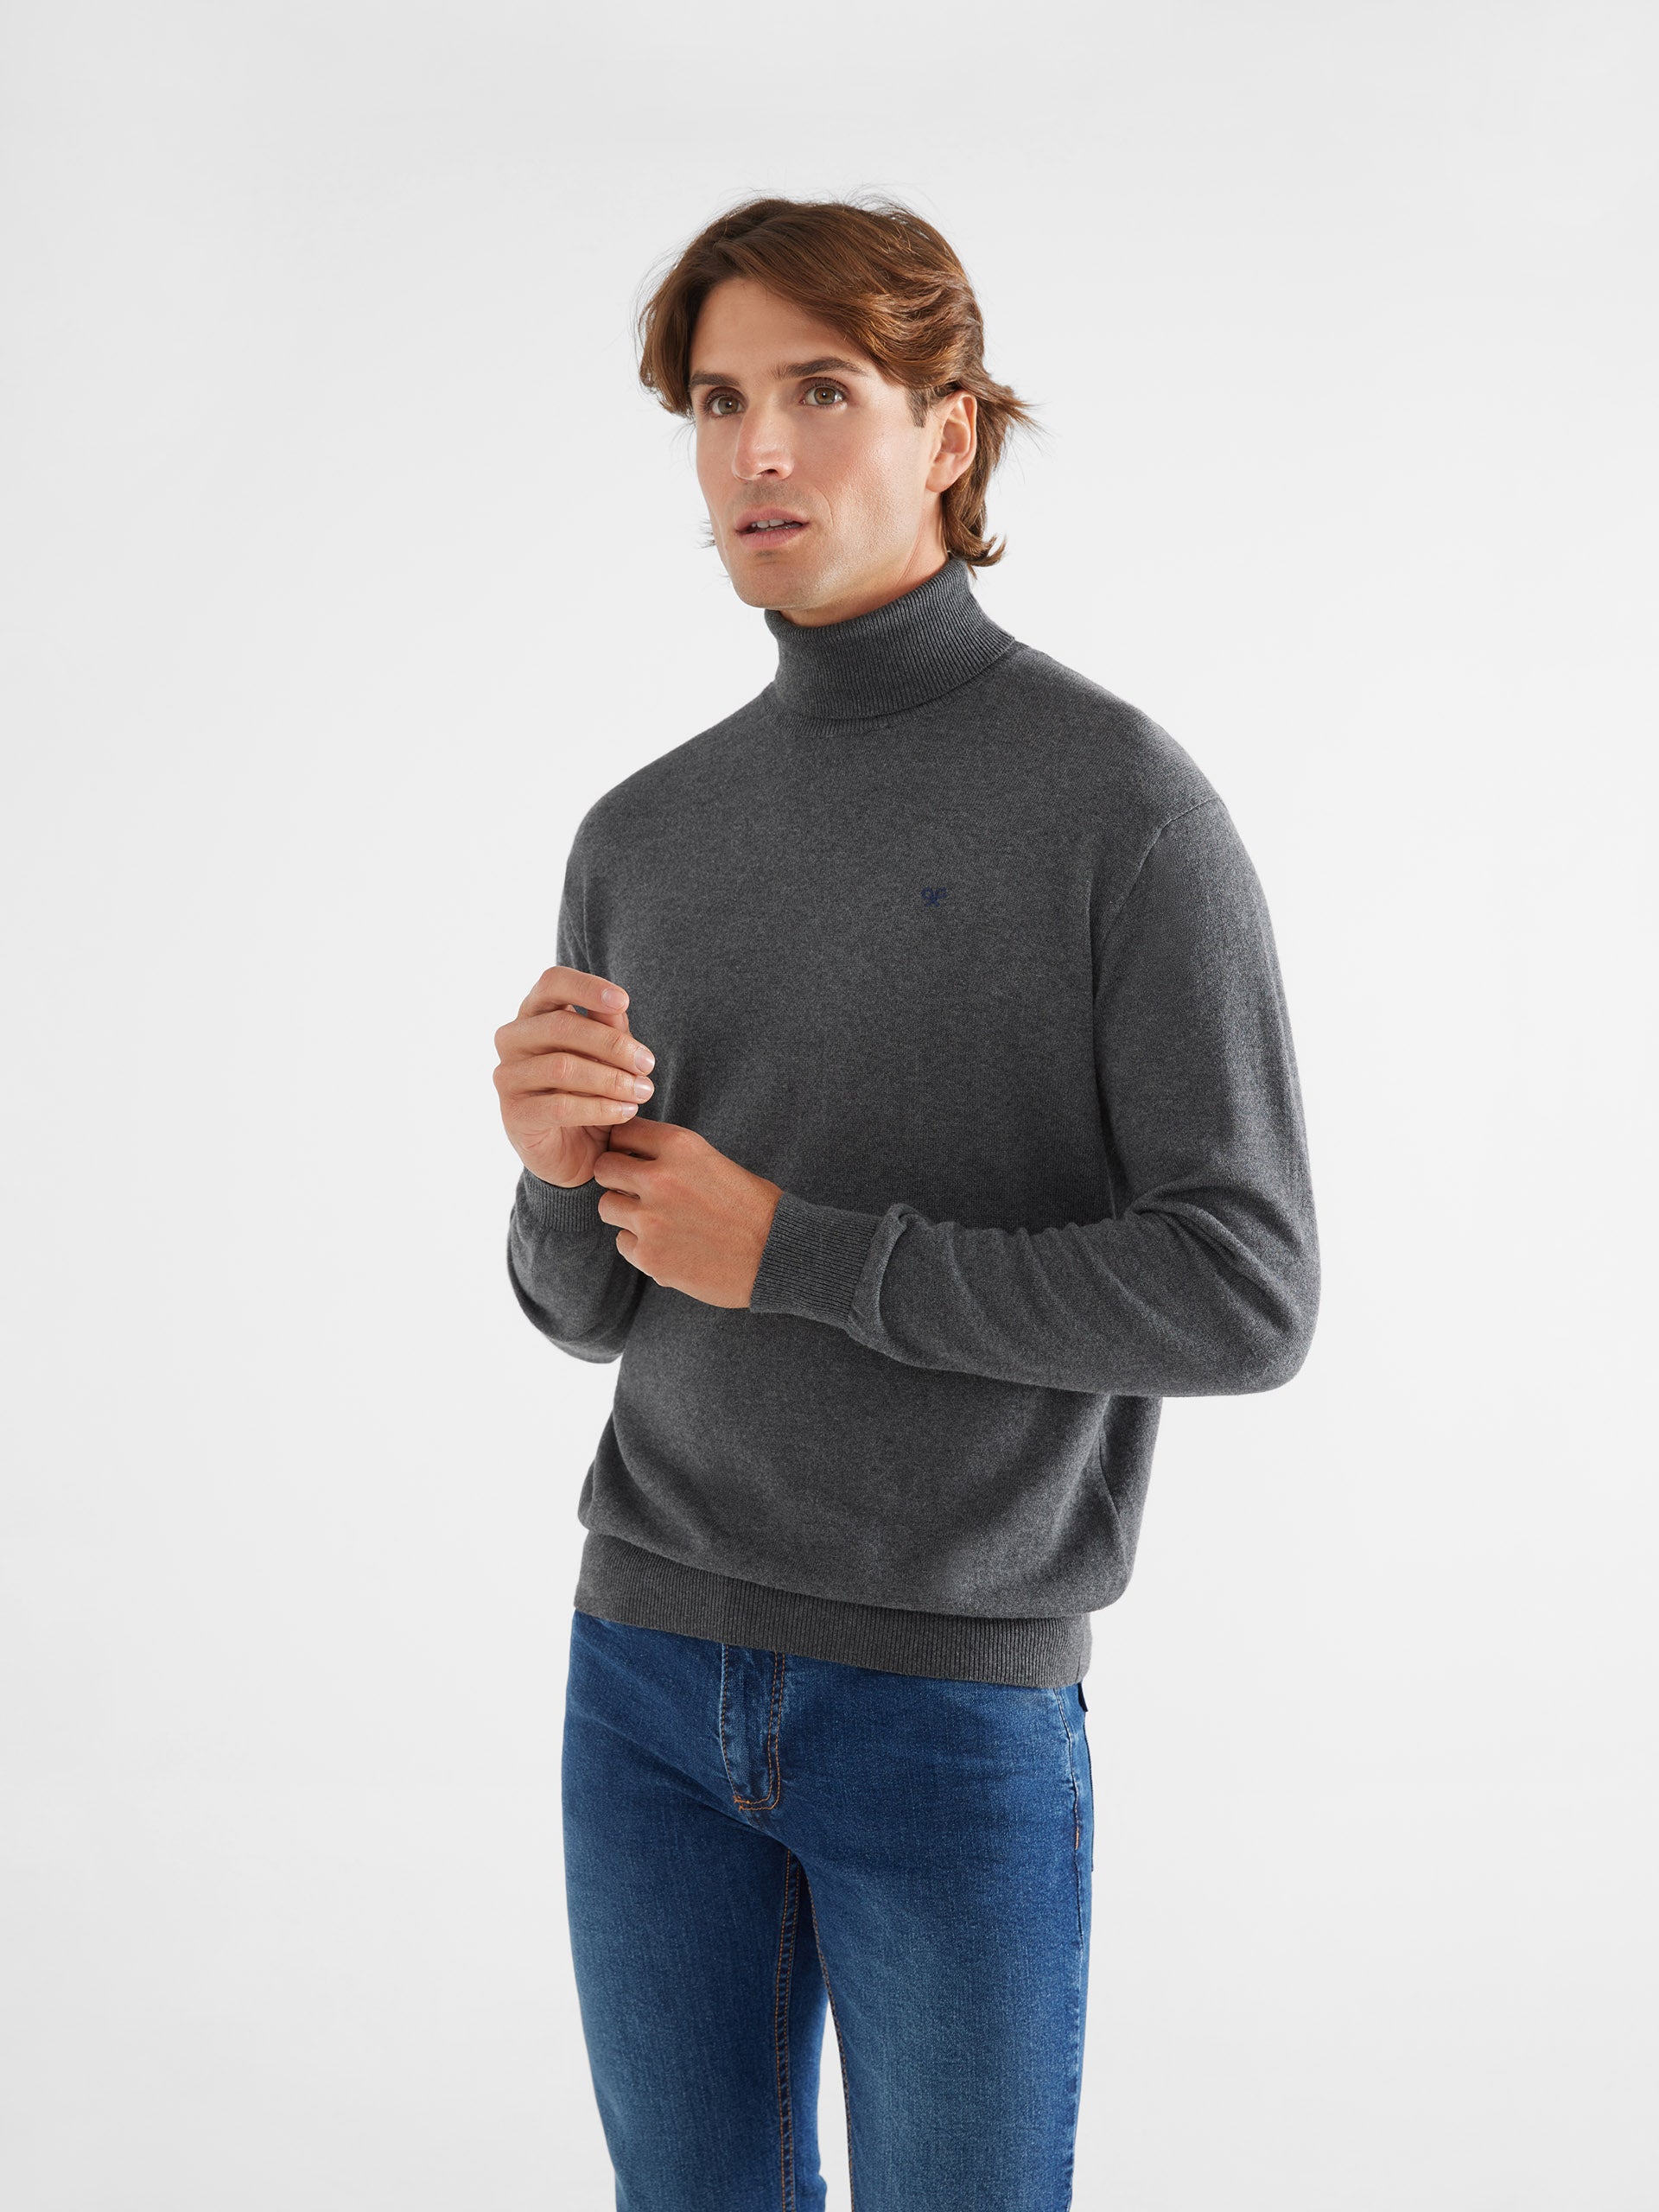 Plain dark gray turtleneck sweater